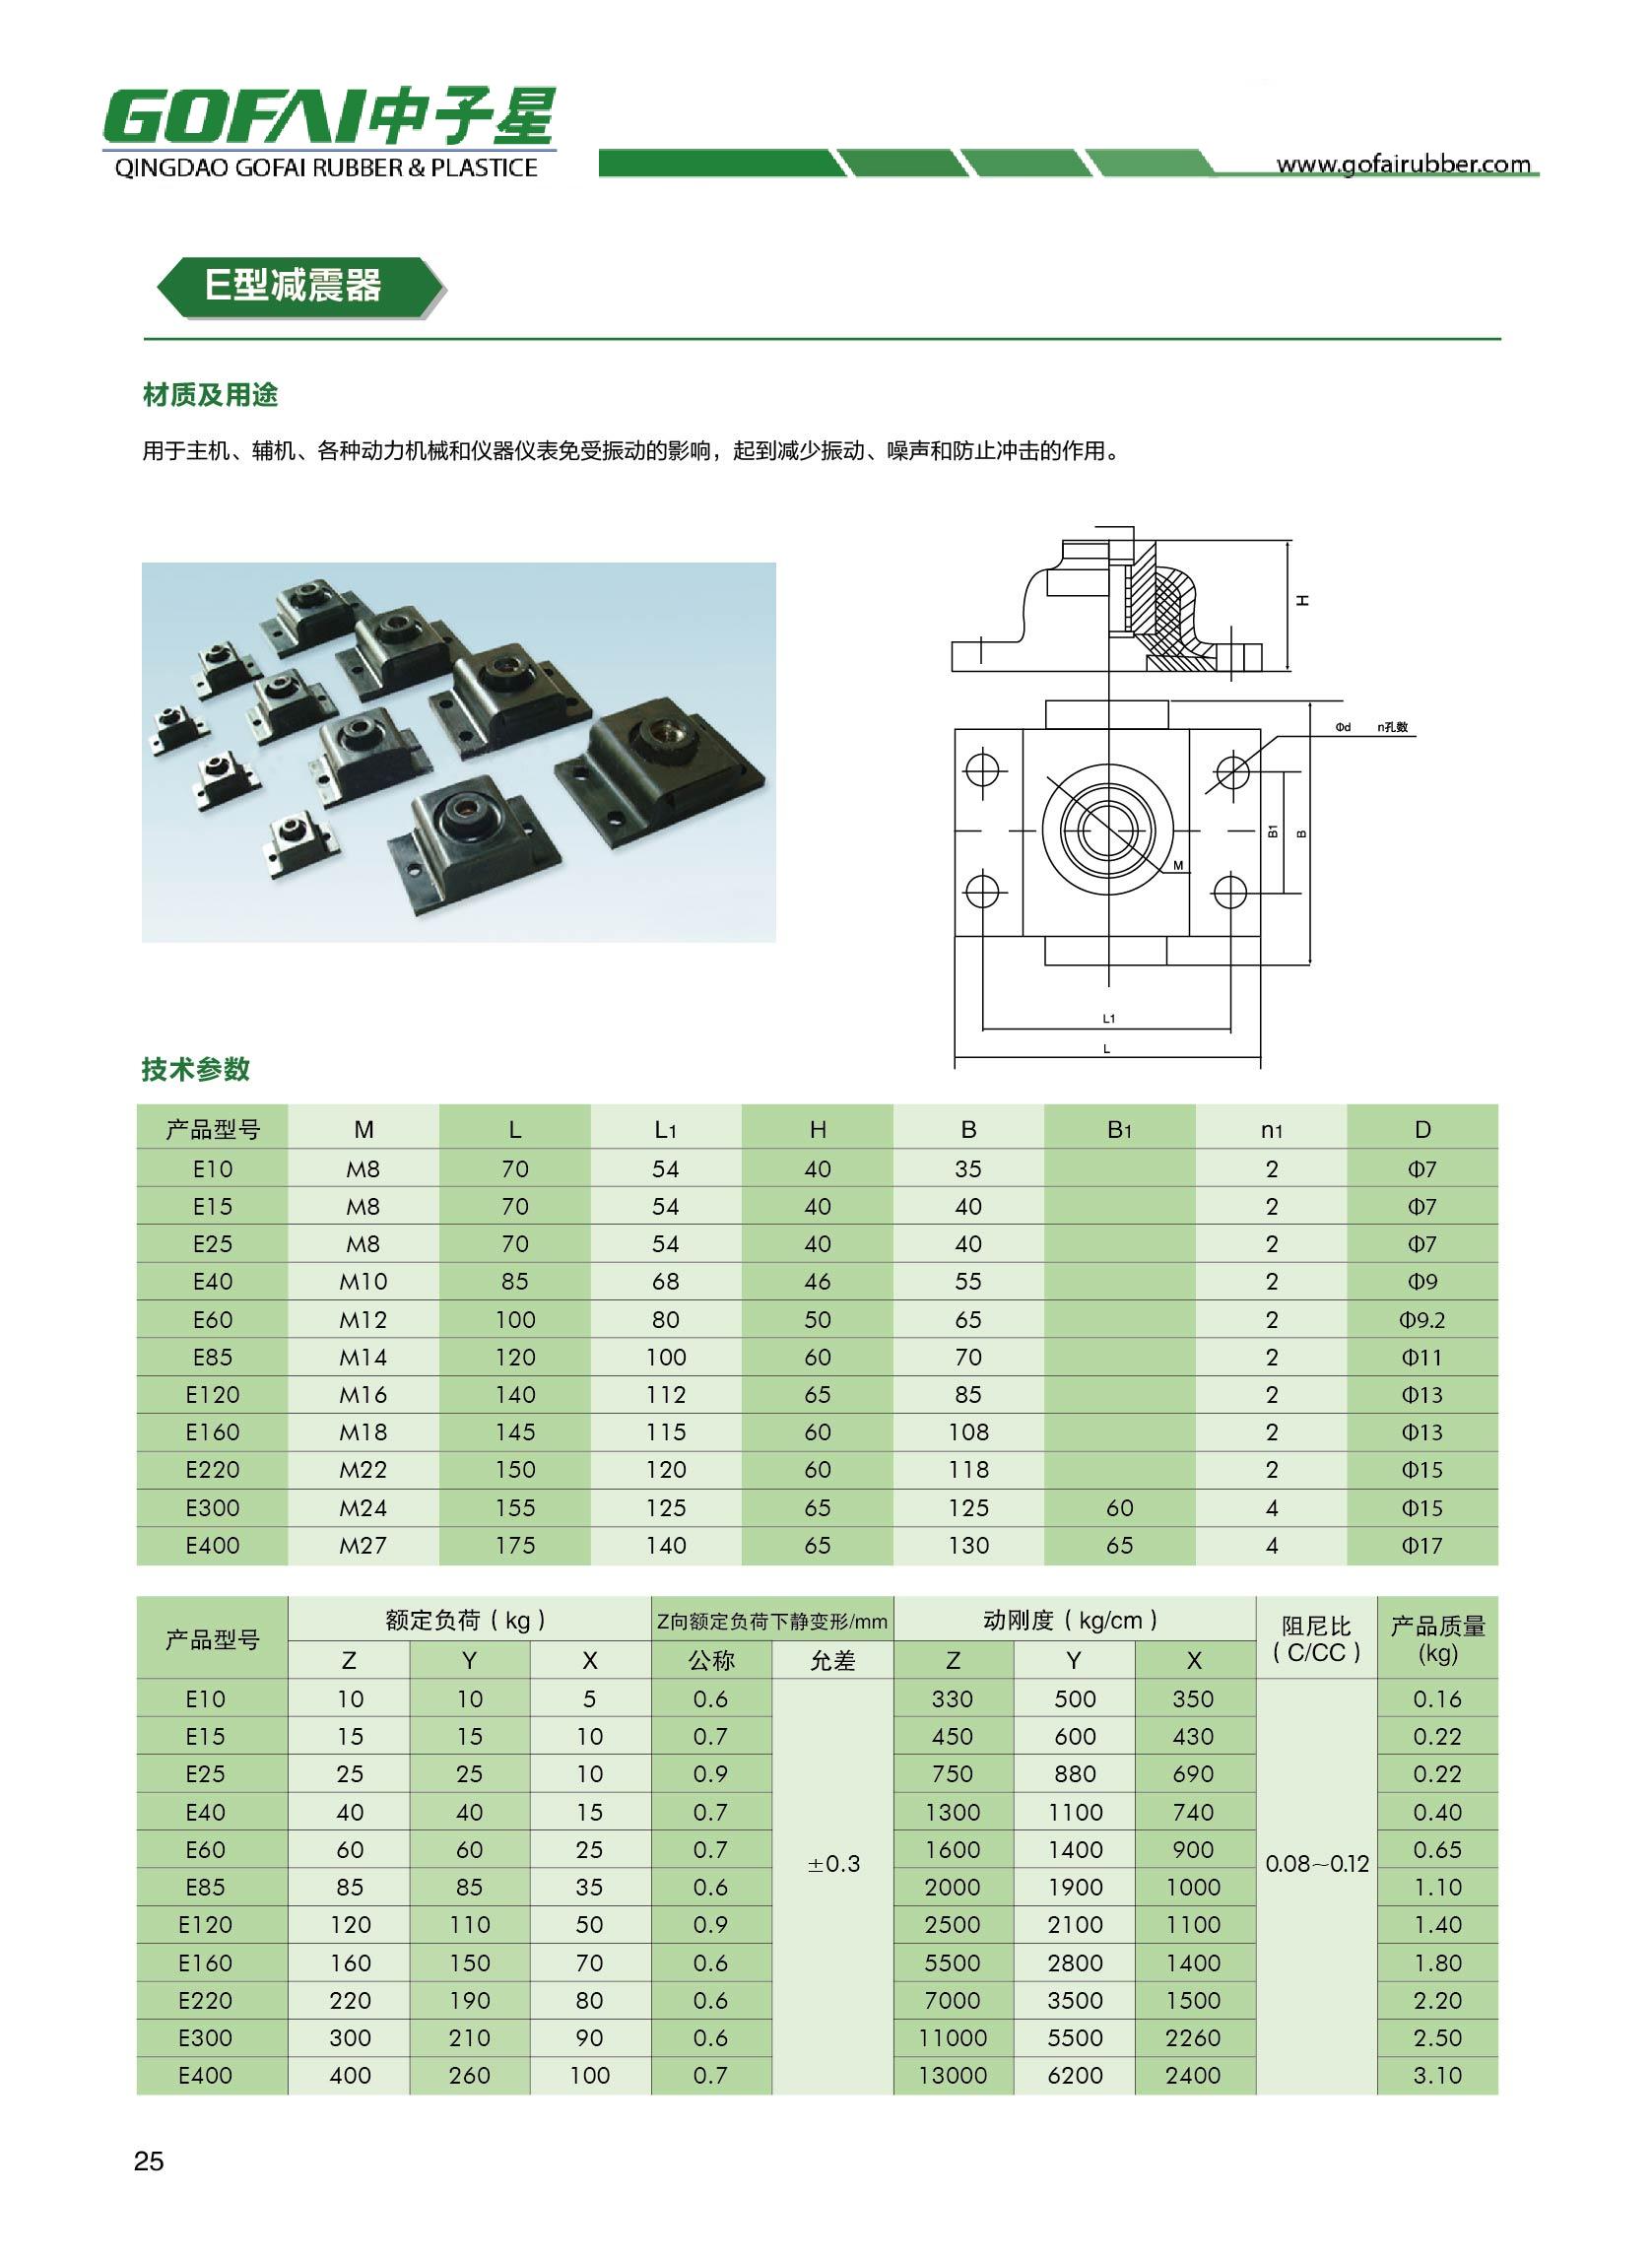 GOFAI catalog for rubber anti-vibration mounts_23.jpg